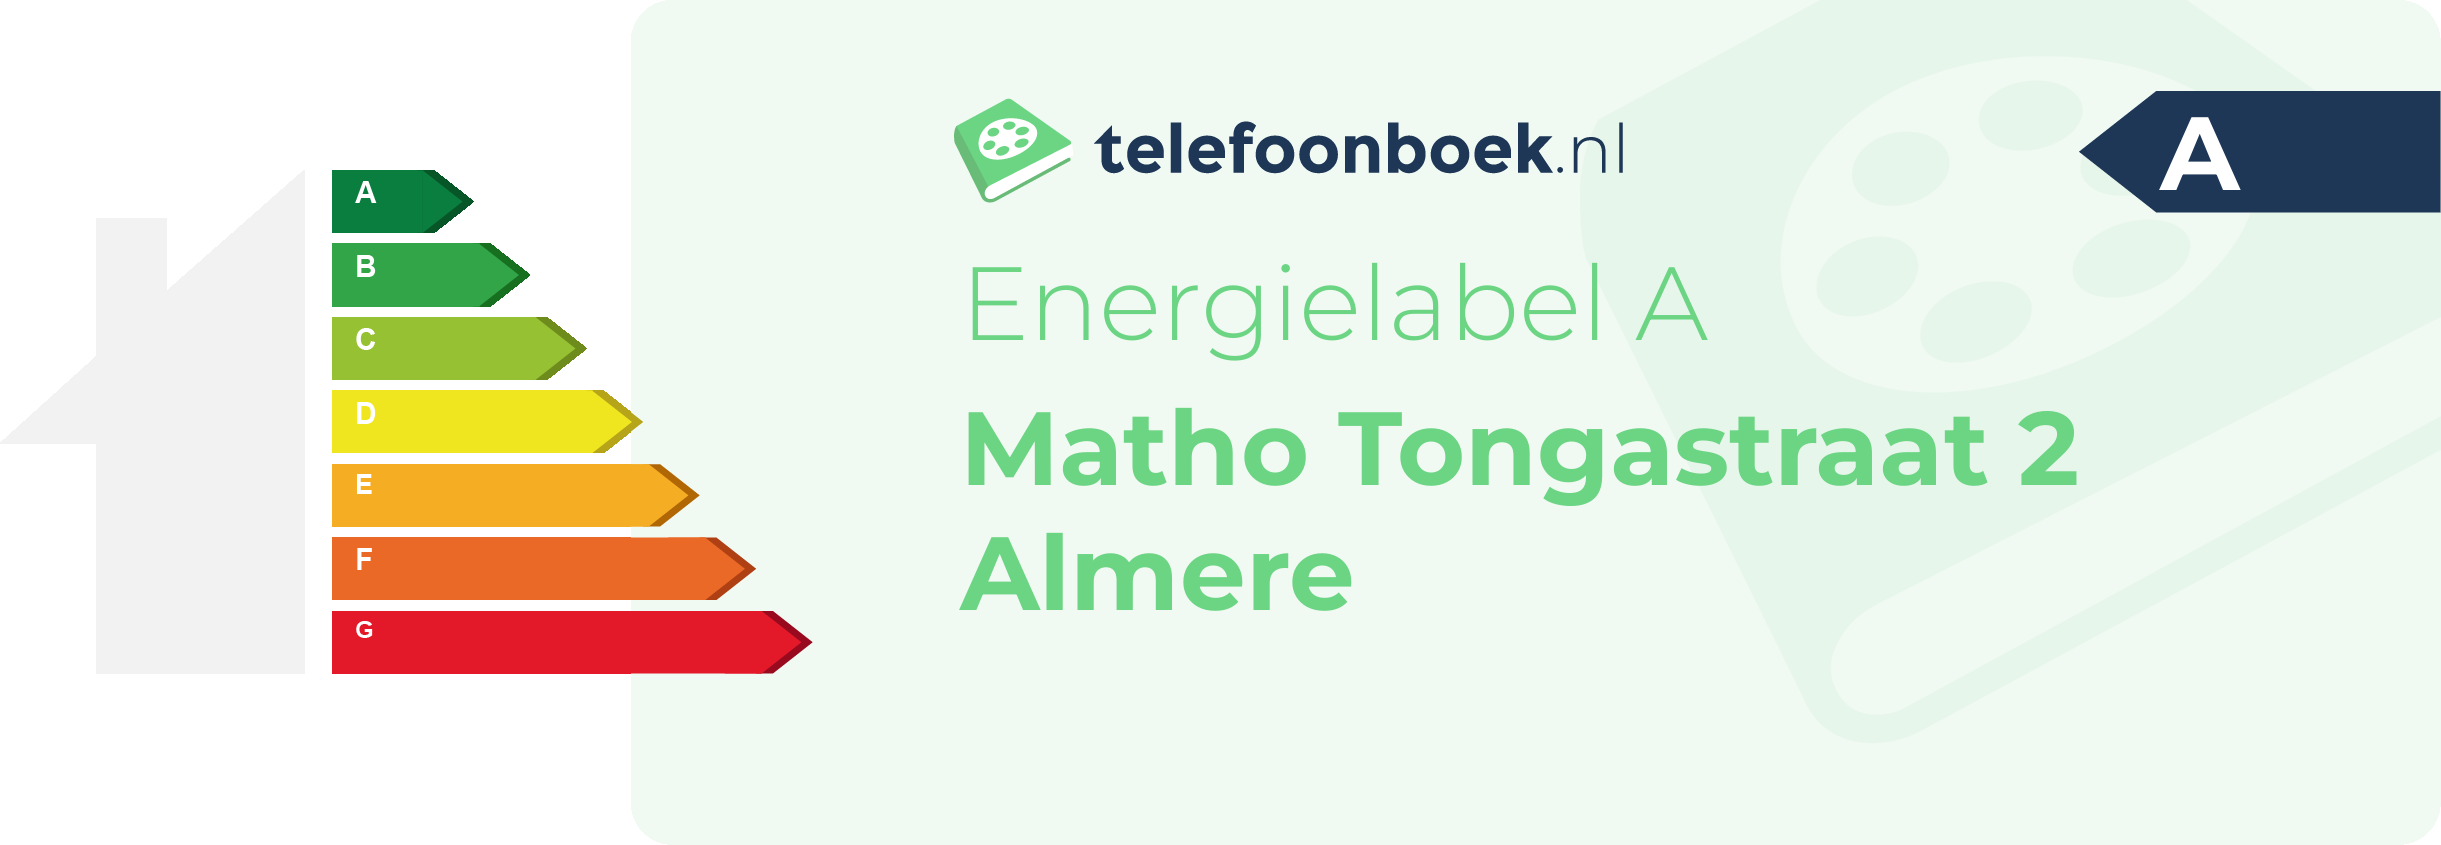 Energielabel Matho Tongastraat 2 Almere